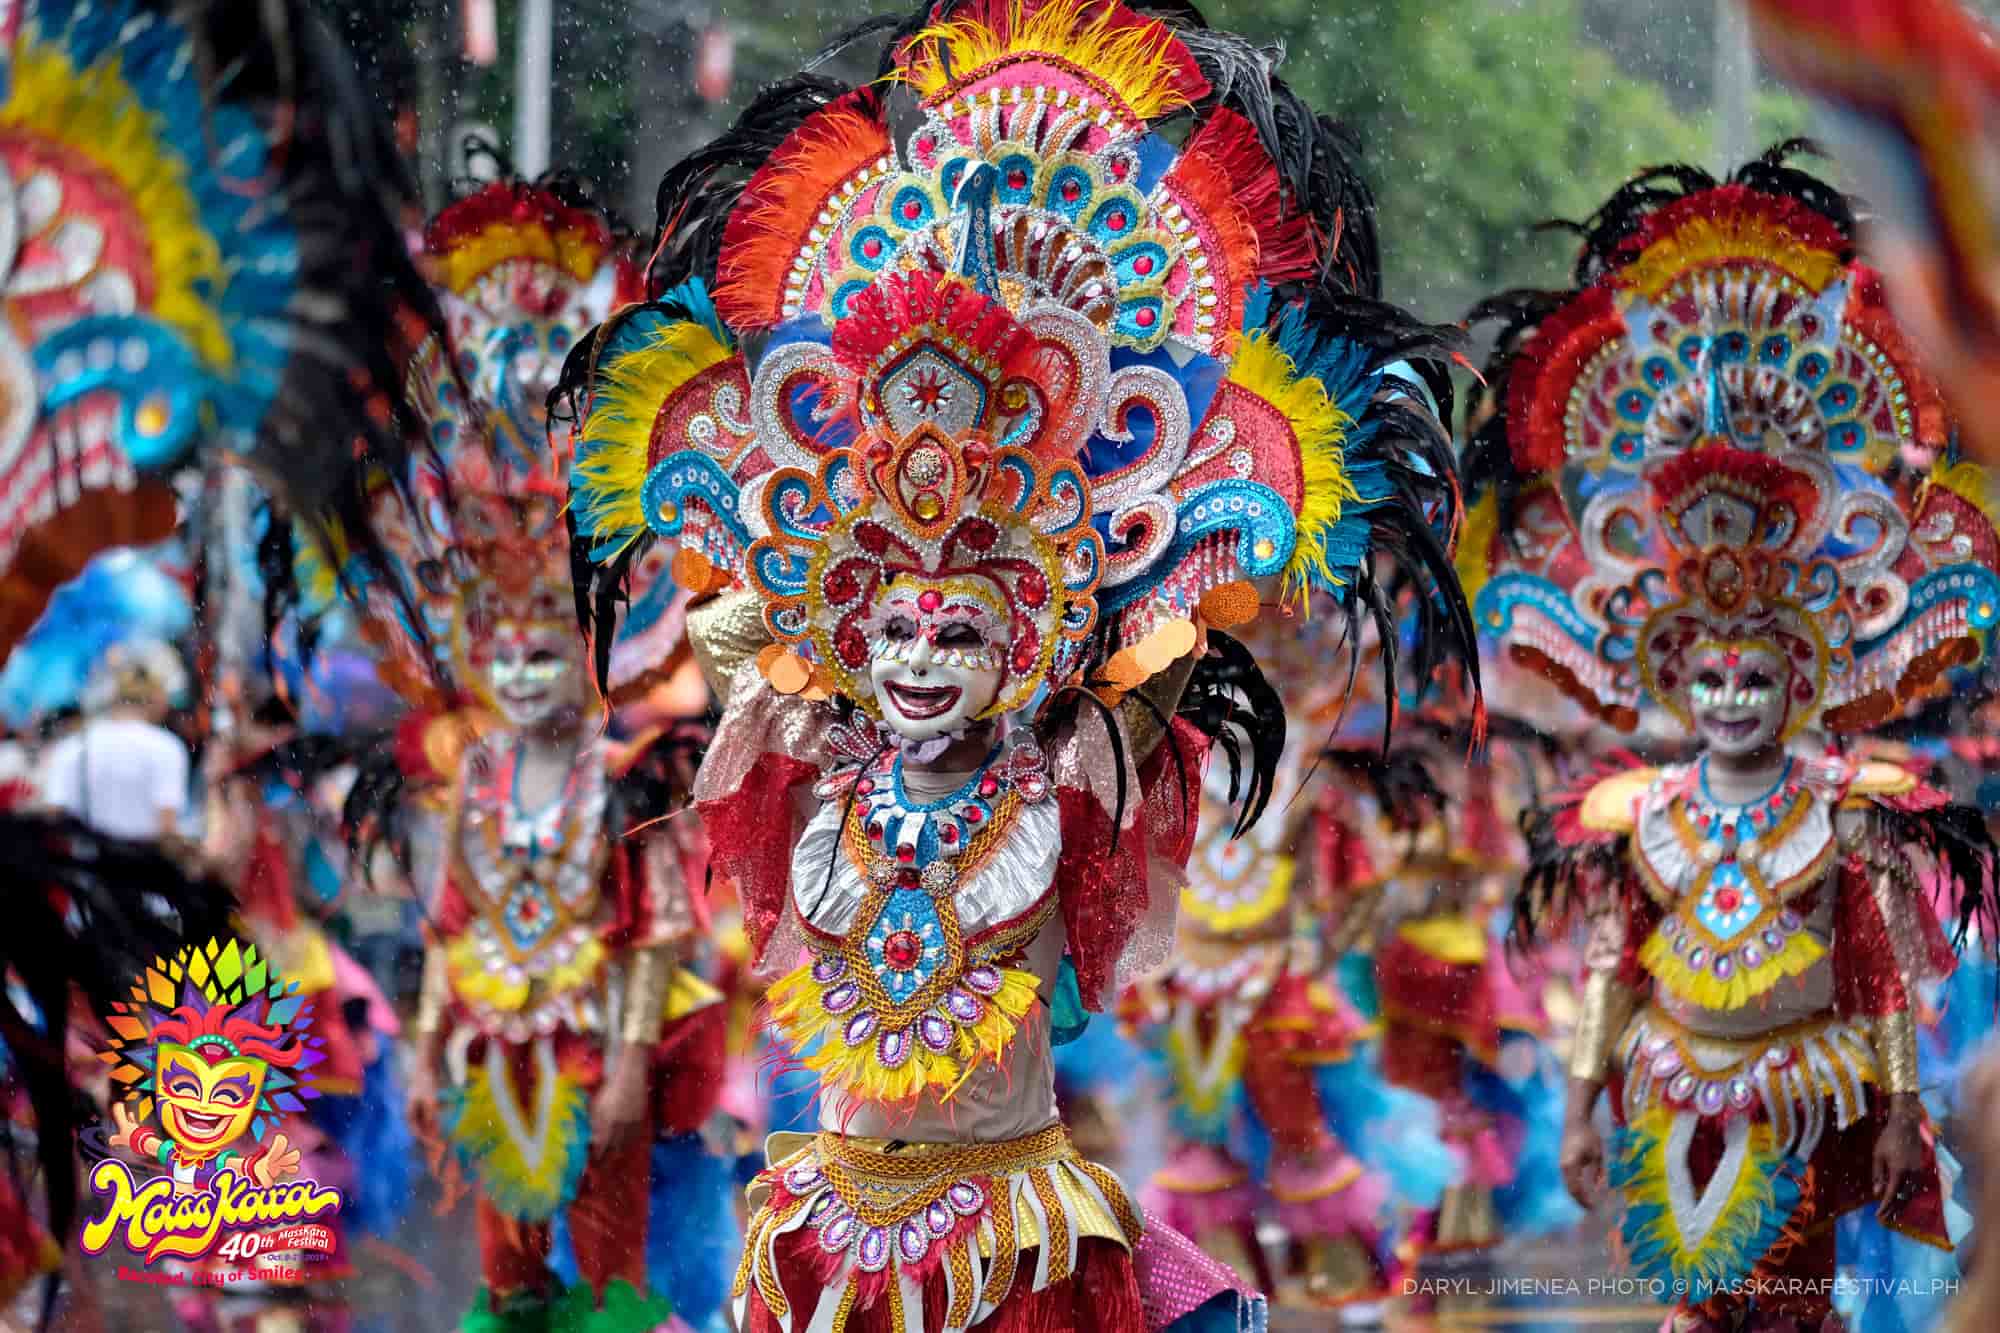 masskara festival in bacolod city of smiles